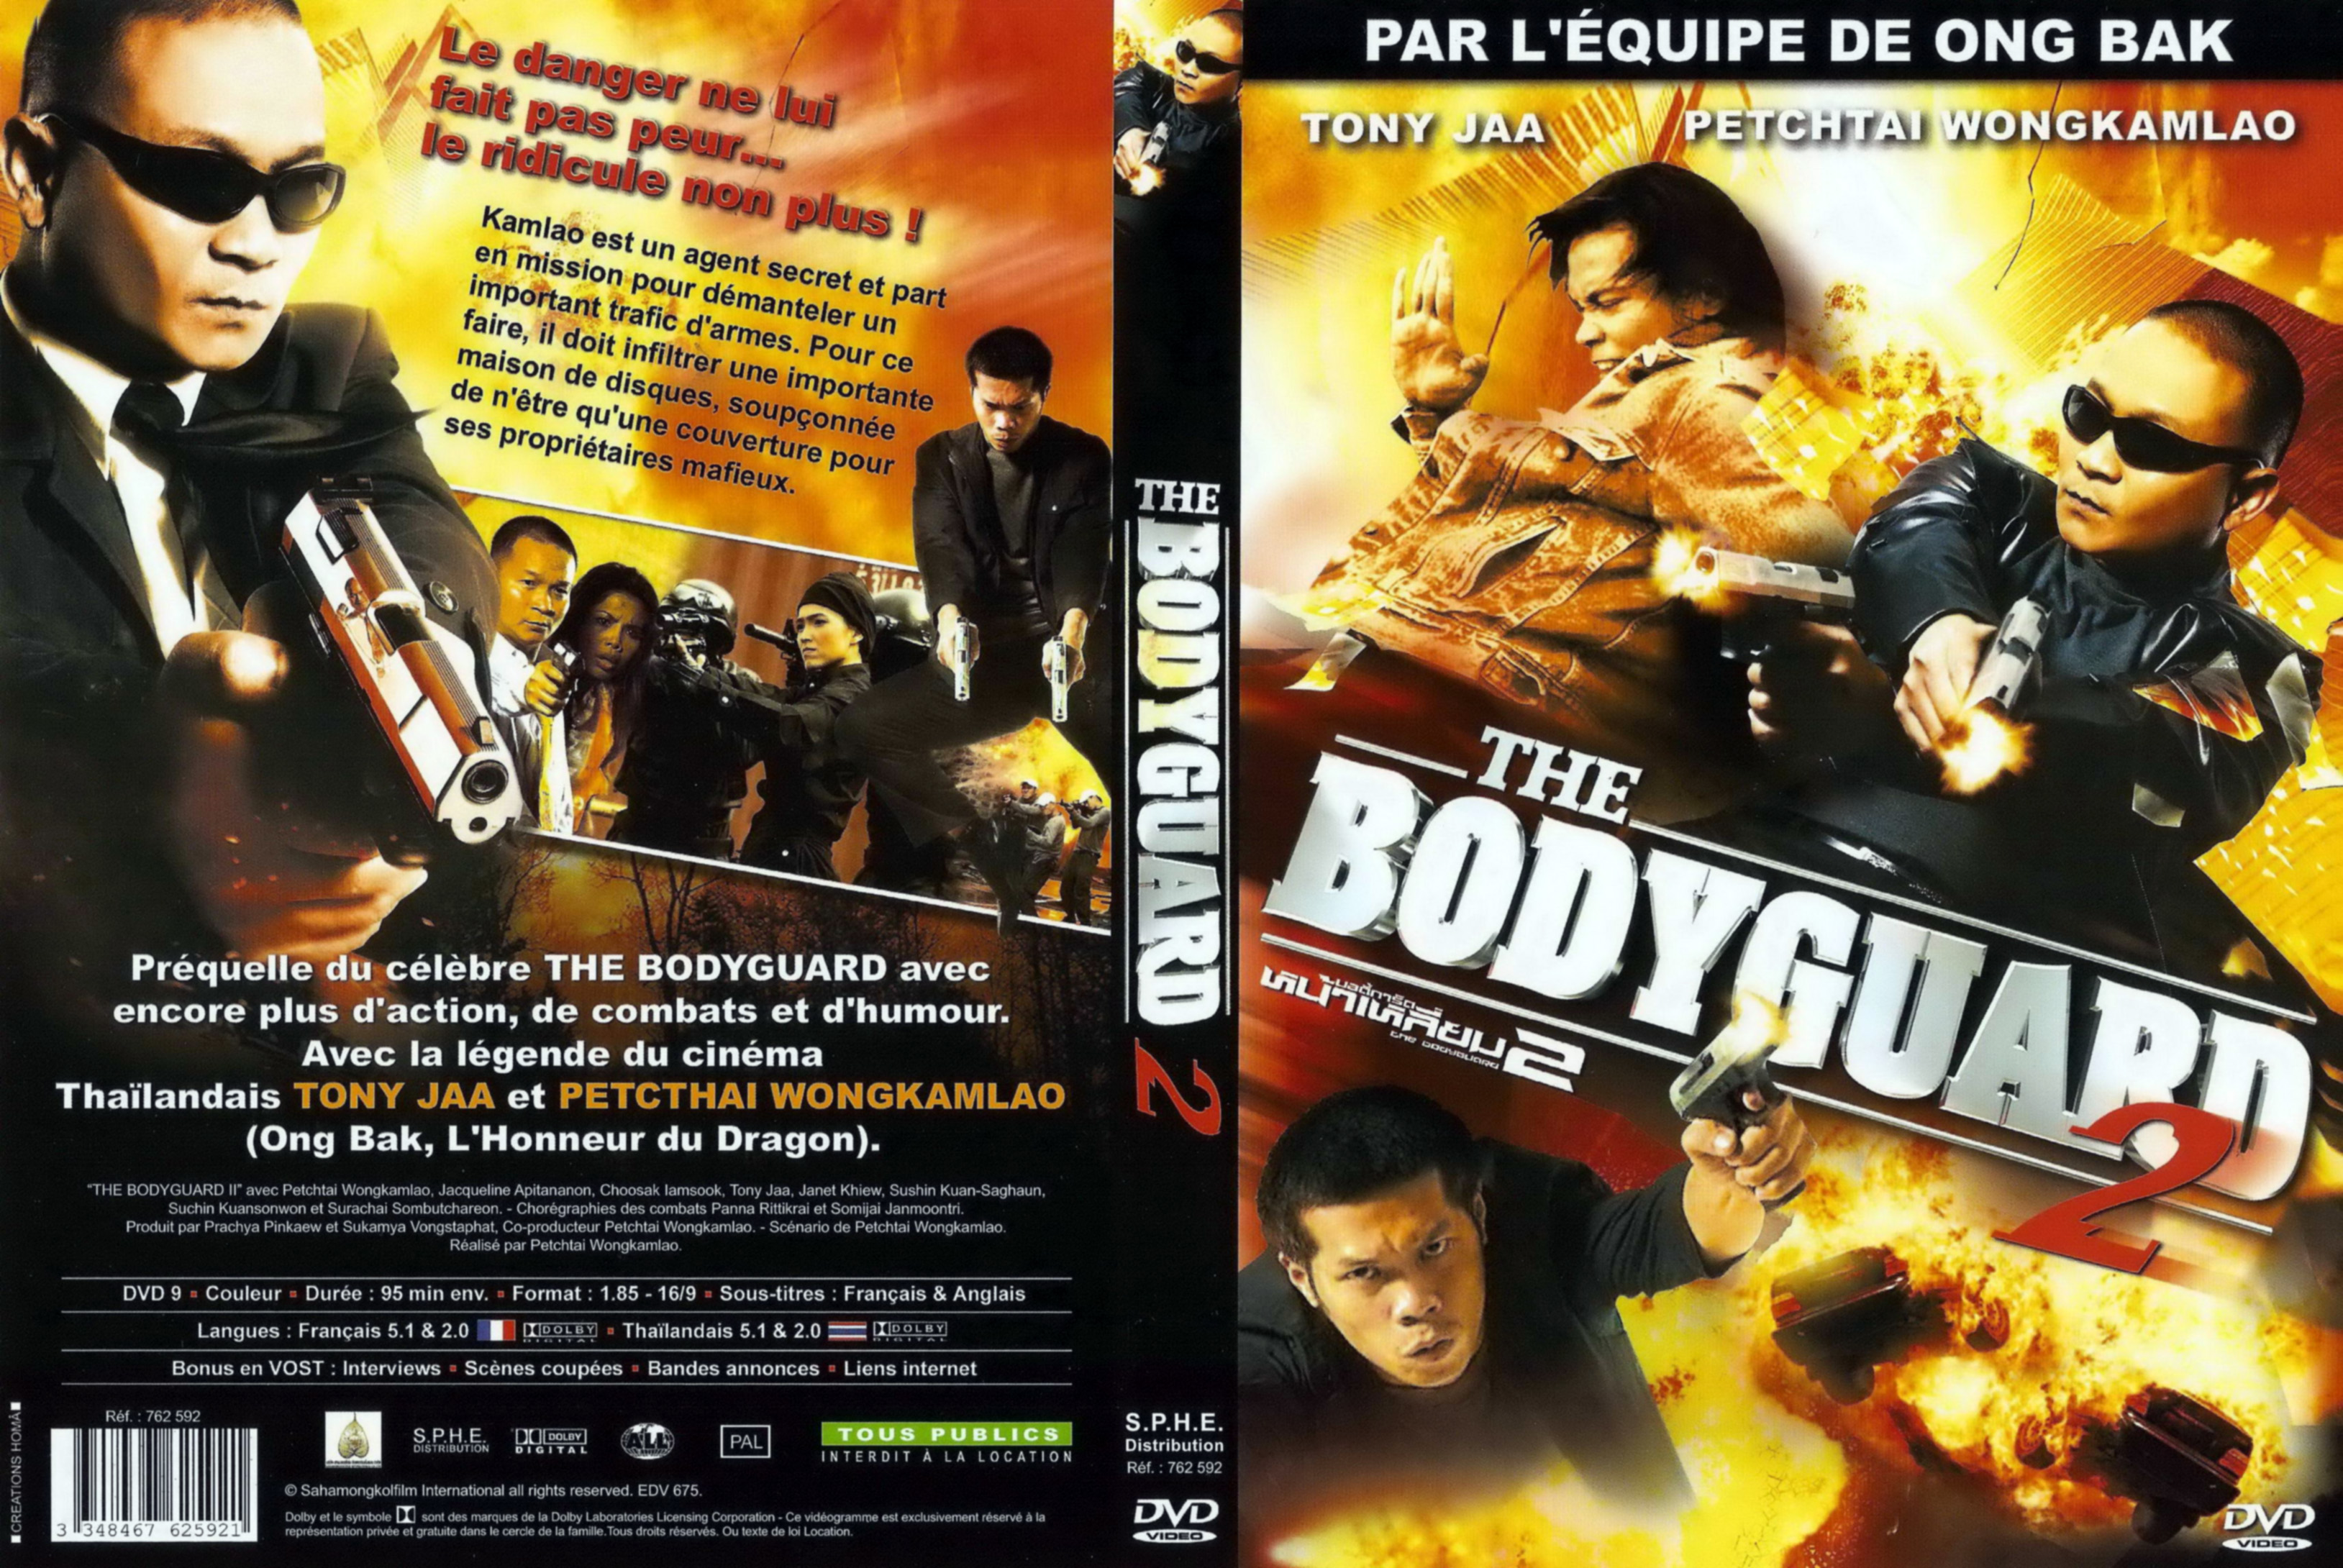 Jaquette DVD The bodyguard 2